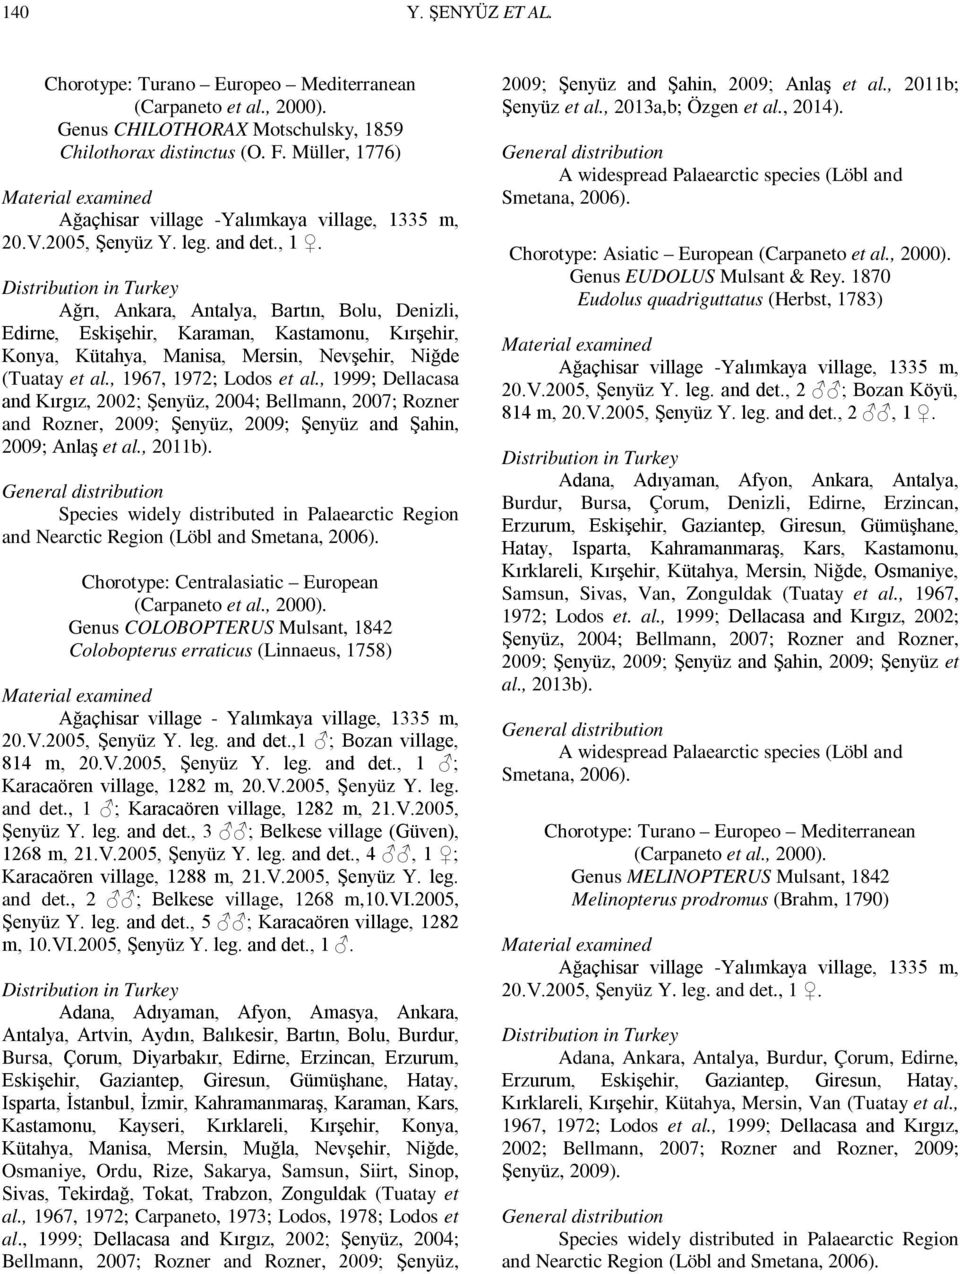 , 1967, 1972; Lodos et al., 1999; Dellacasa and Kırgız, 2002; Şenyüz, 2004; Bellmann, 2007; Rozner and Rozner, 2009; Şenyüz, 2009; Şenyüz and Şahin, 2009; Anlaş et al., 2011b).